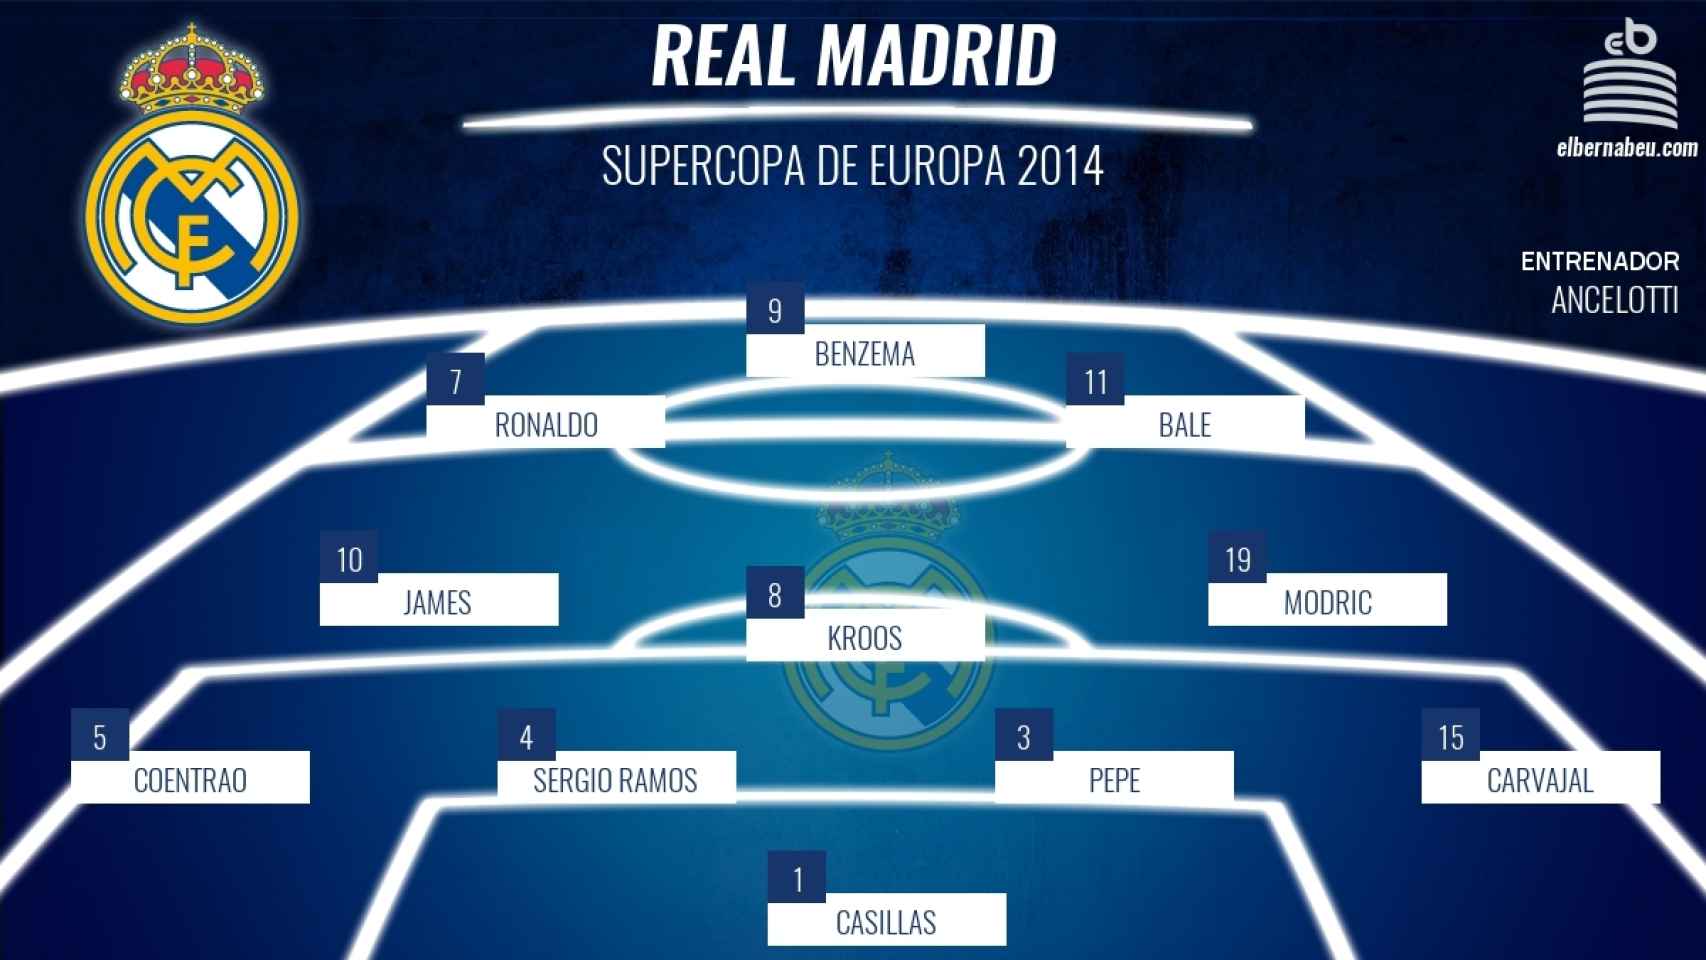 Once inicial del Real Madrid en la Supercopa de Europa de 2014